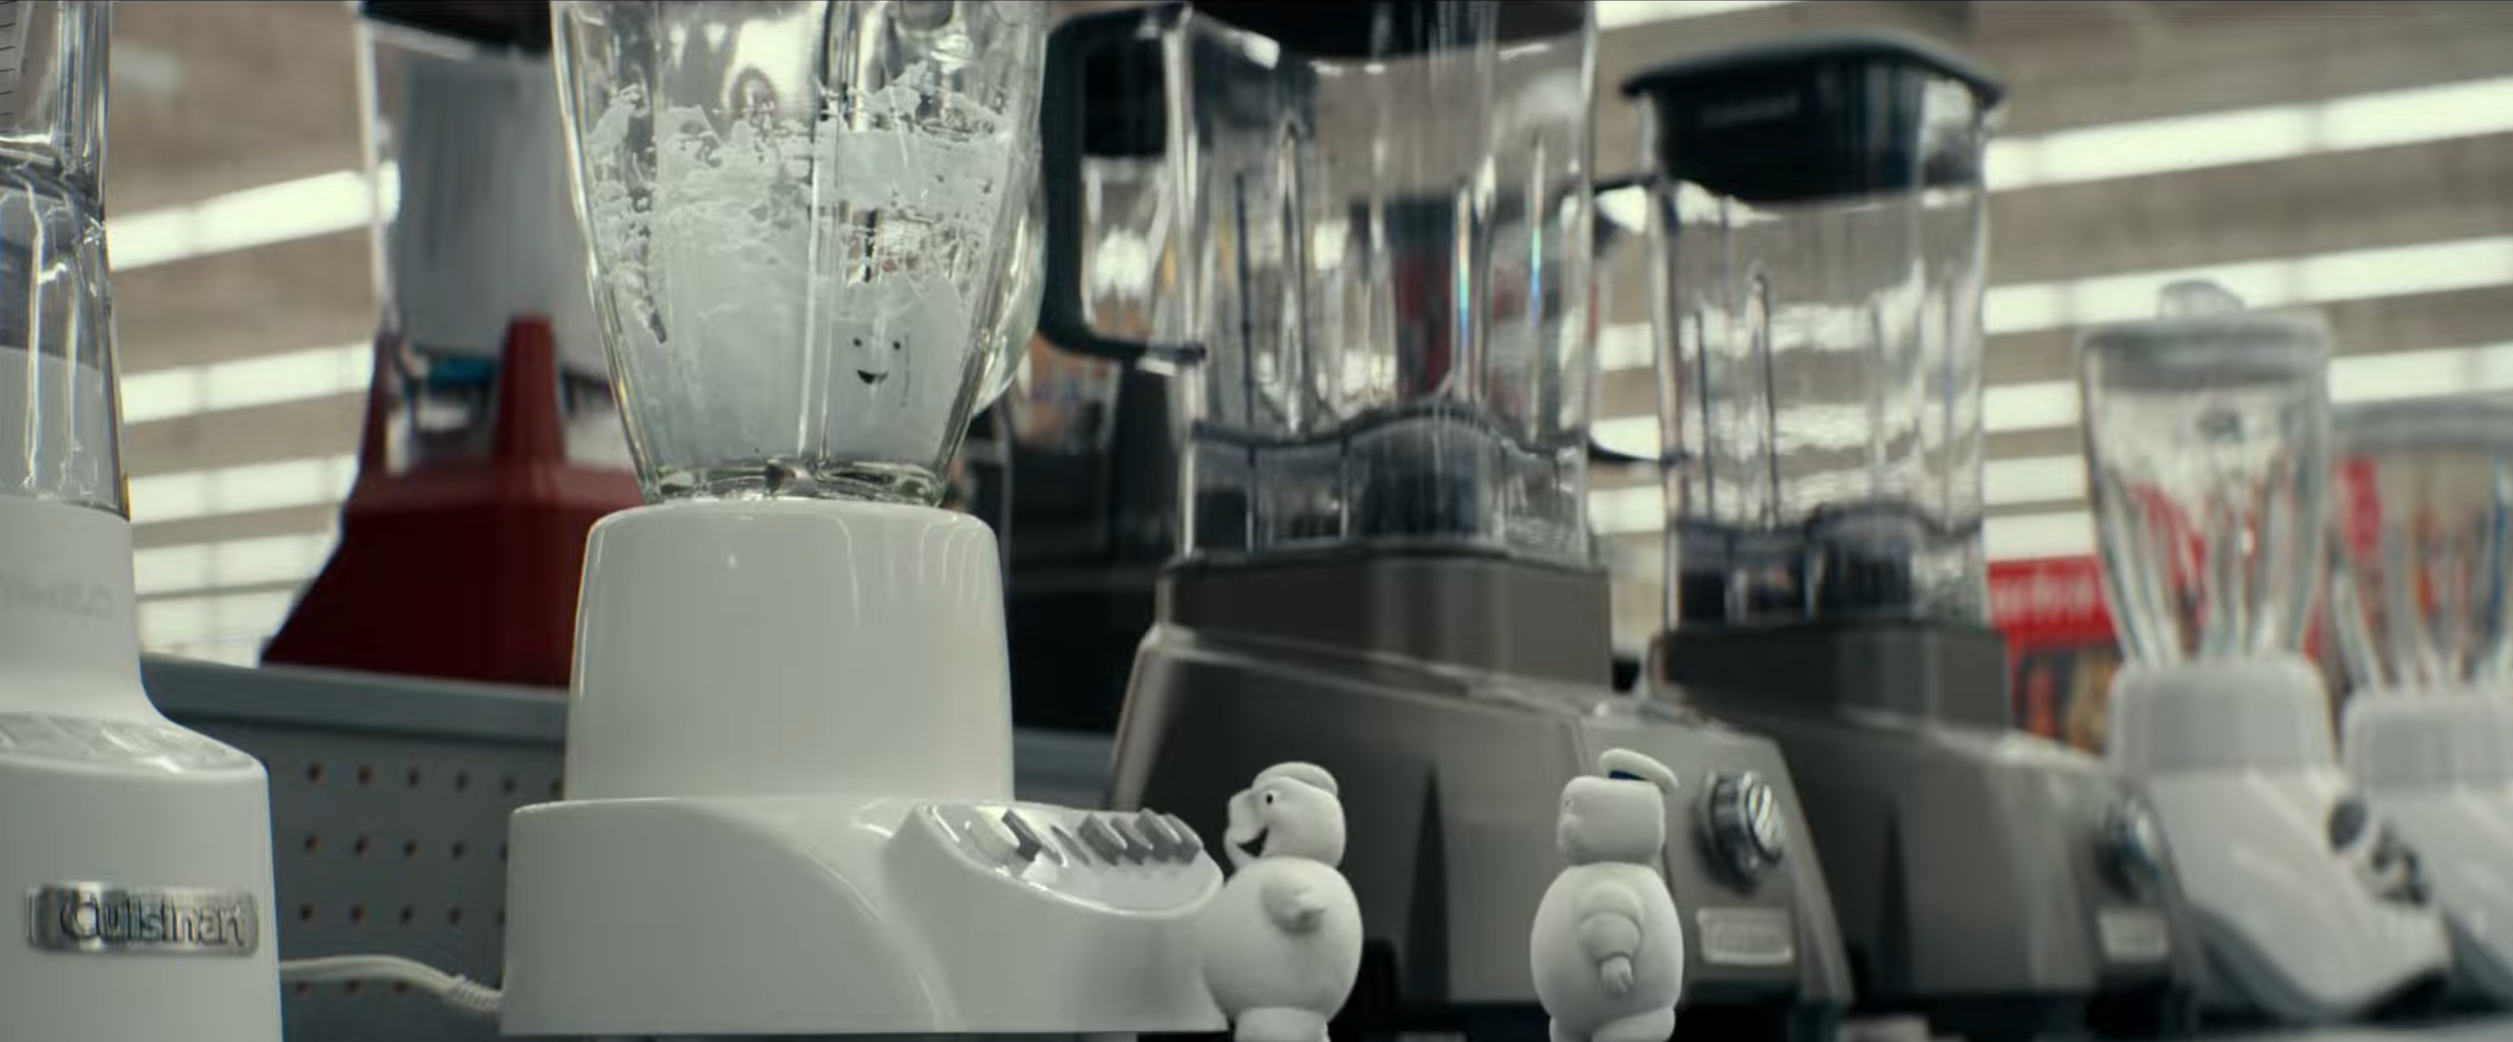 Ghostbusters Afterlife International Trailer Minipufts In Blender